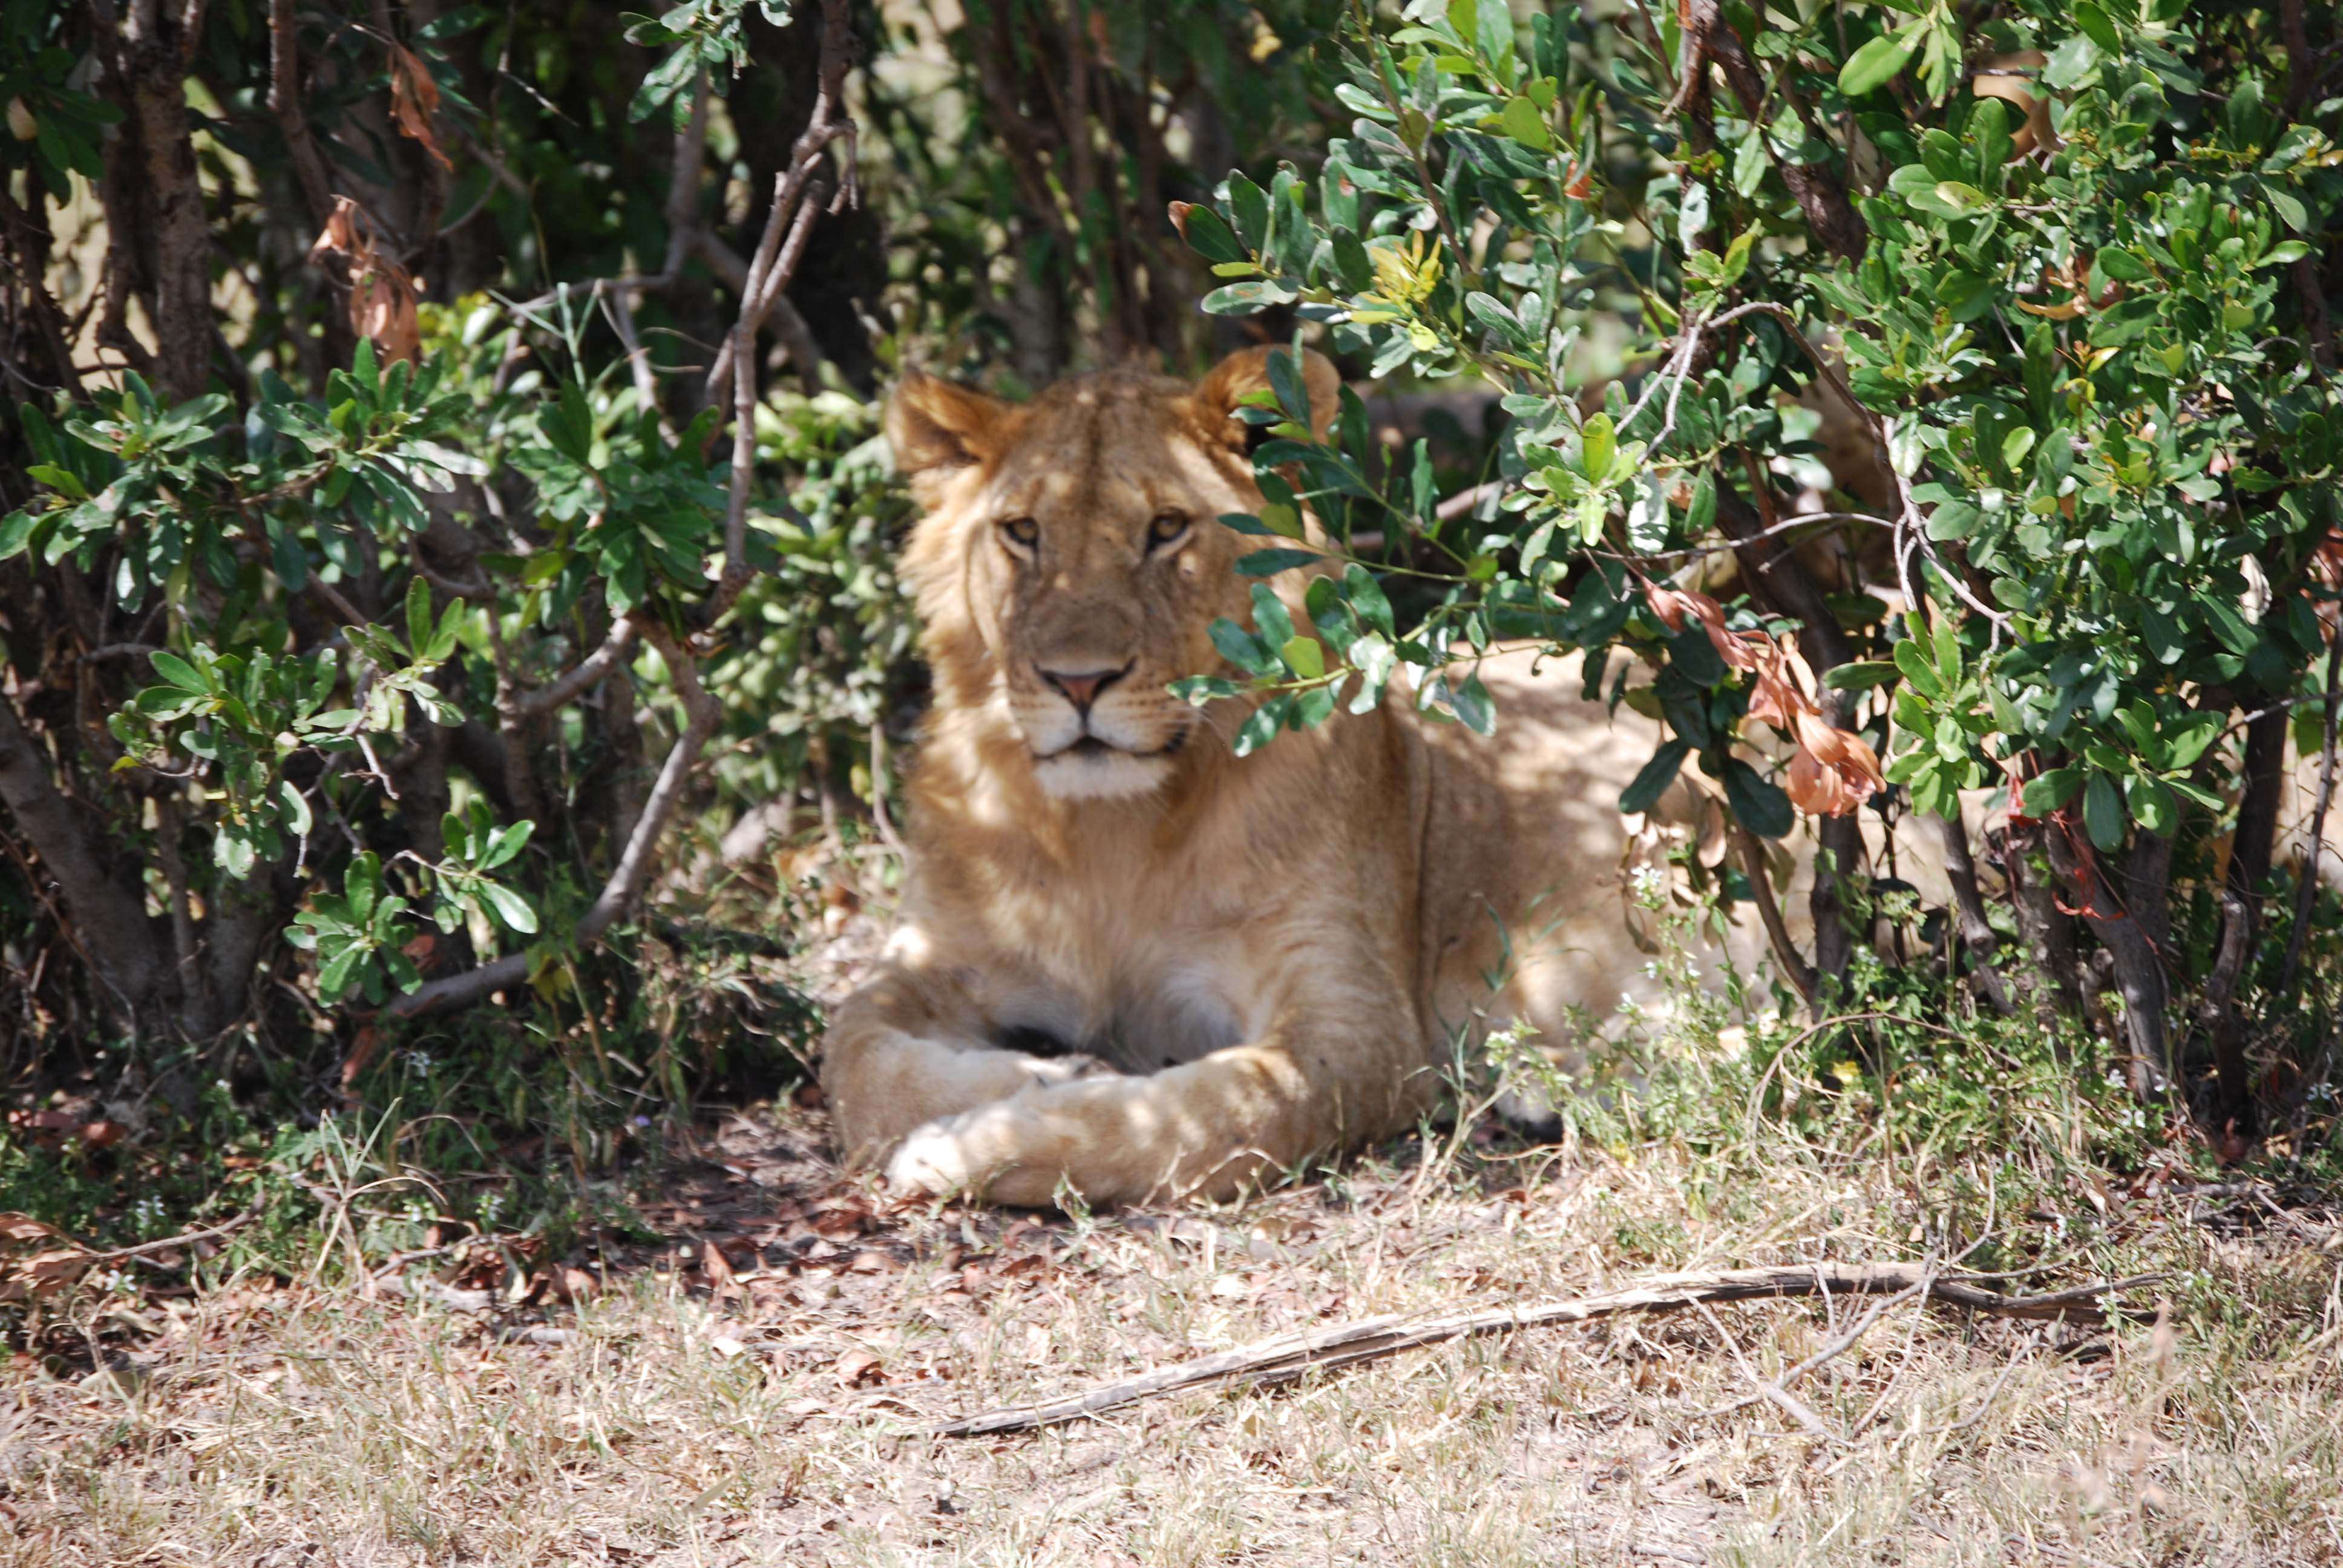 Nuestro primer safari - Regreso al Mara - Kenia (4)